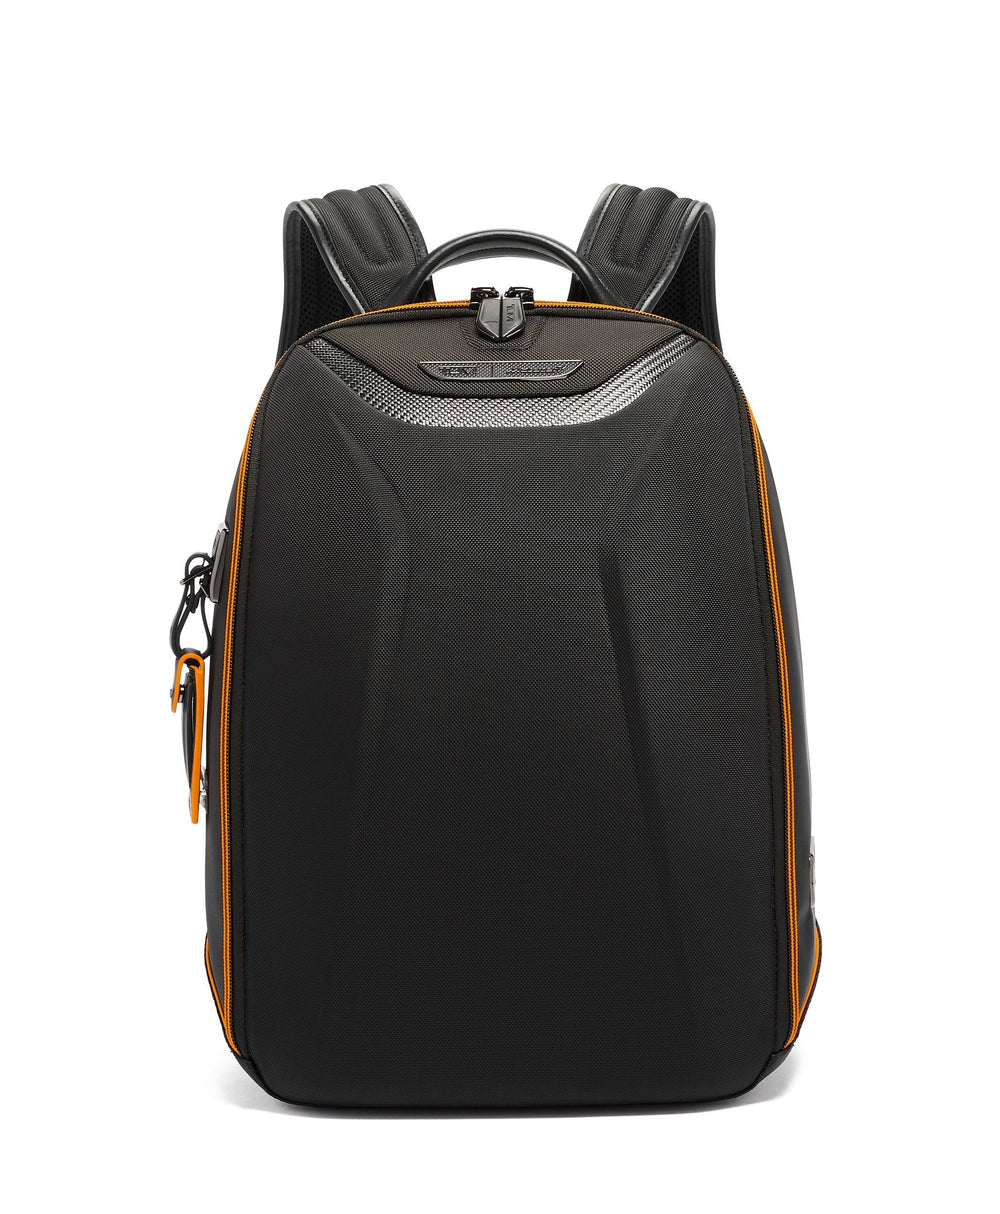 halo-backpack TUMI I McLaren